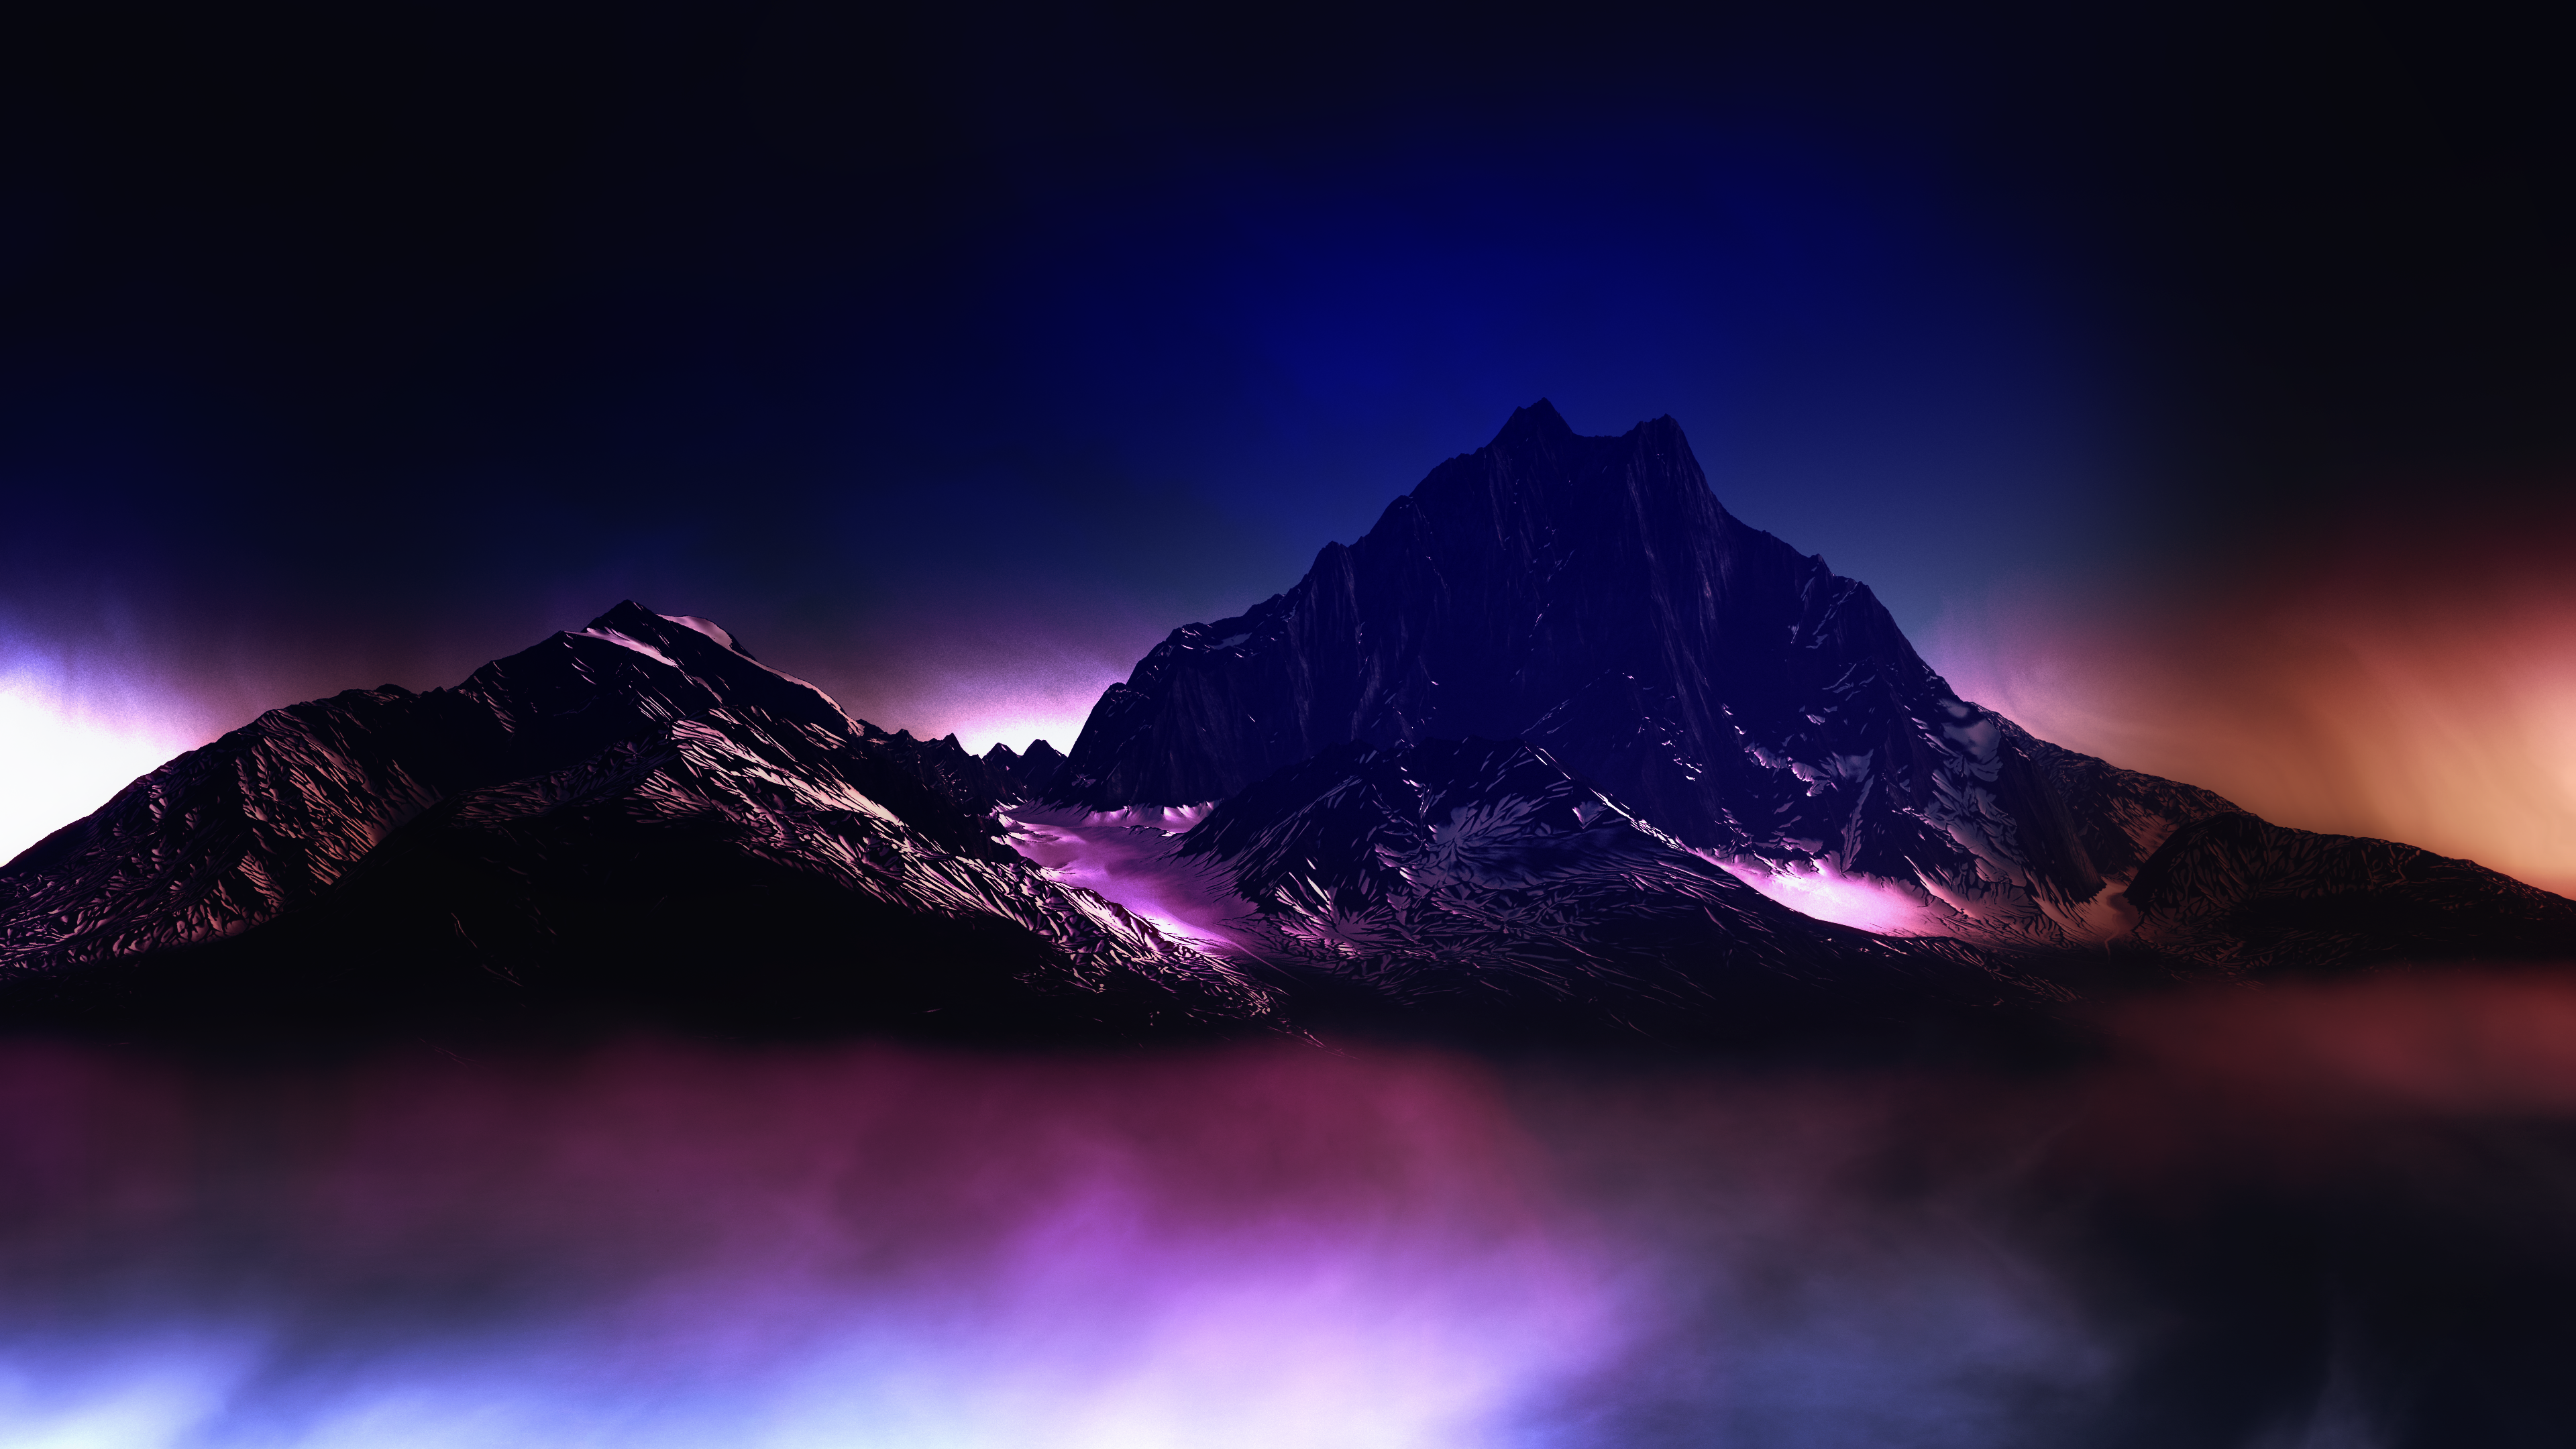 Hypnoshot Digital Digital Art Artwork Illustration Render Mountains Nature Landscape Nightscape Nigh 3840x2160